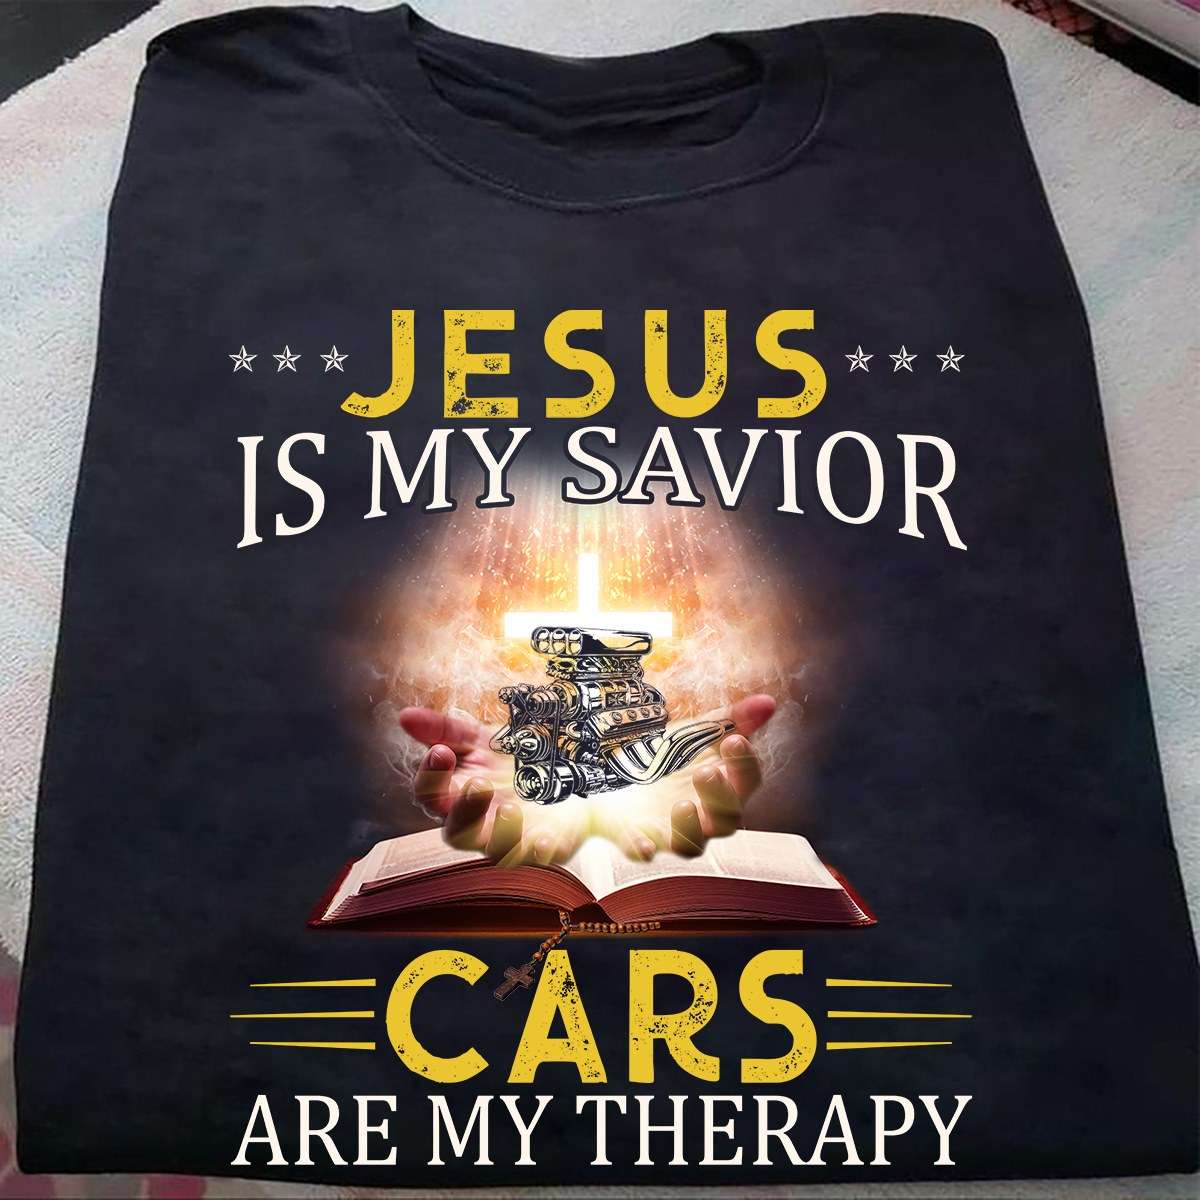 Jesus is my savior, cars are my therapy - Jesus and car engine